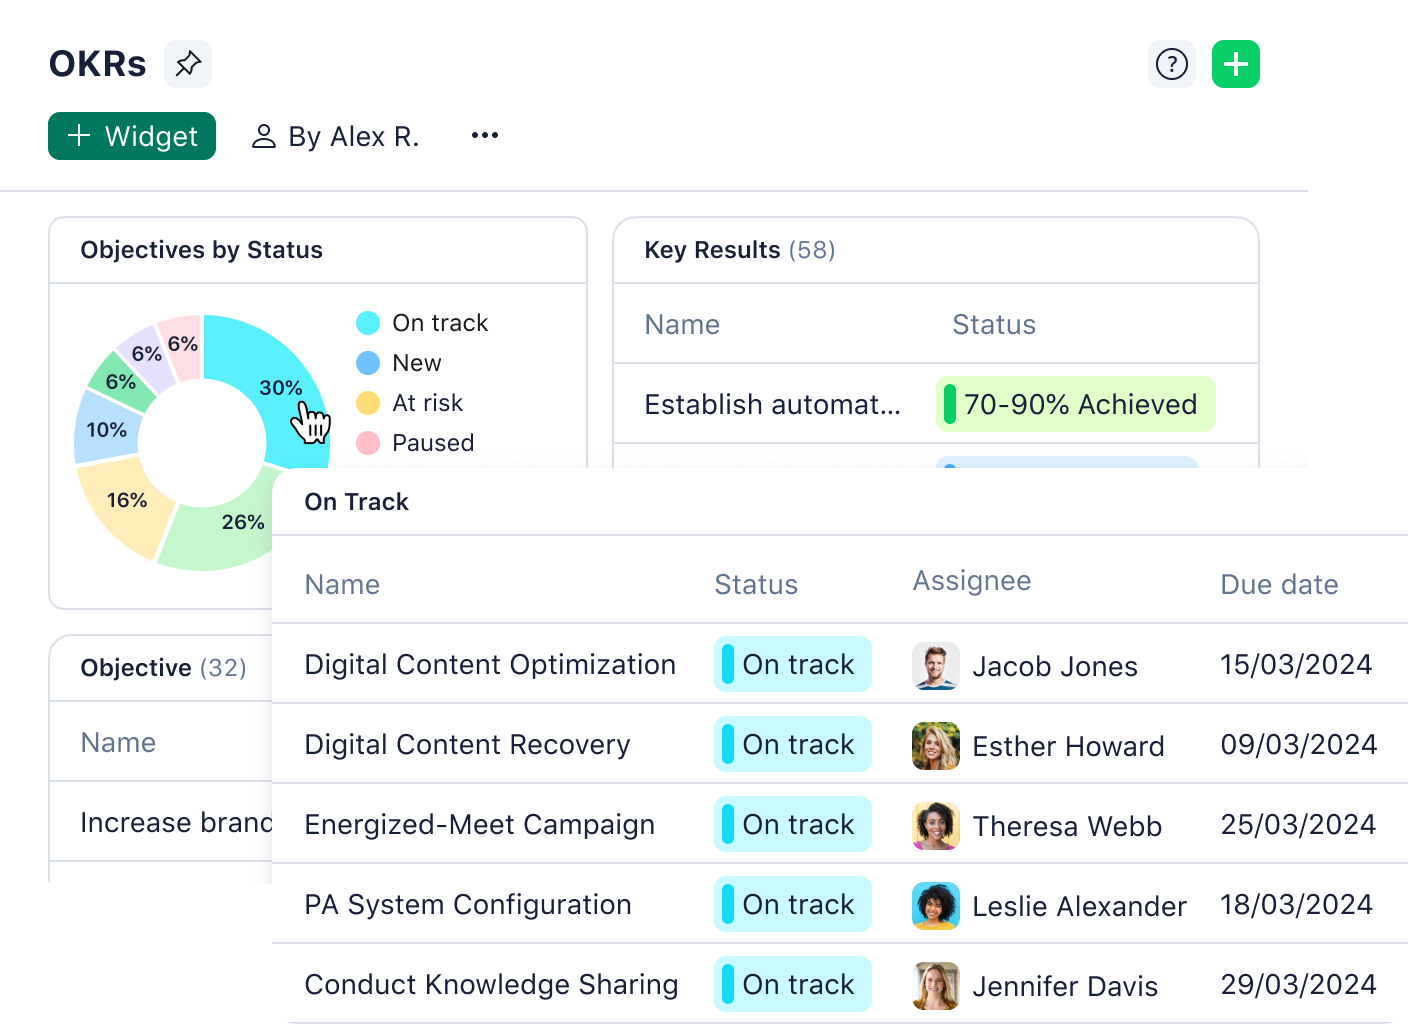 product screenshot of wrike dashboards showing company okrs